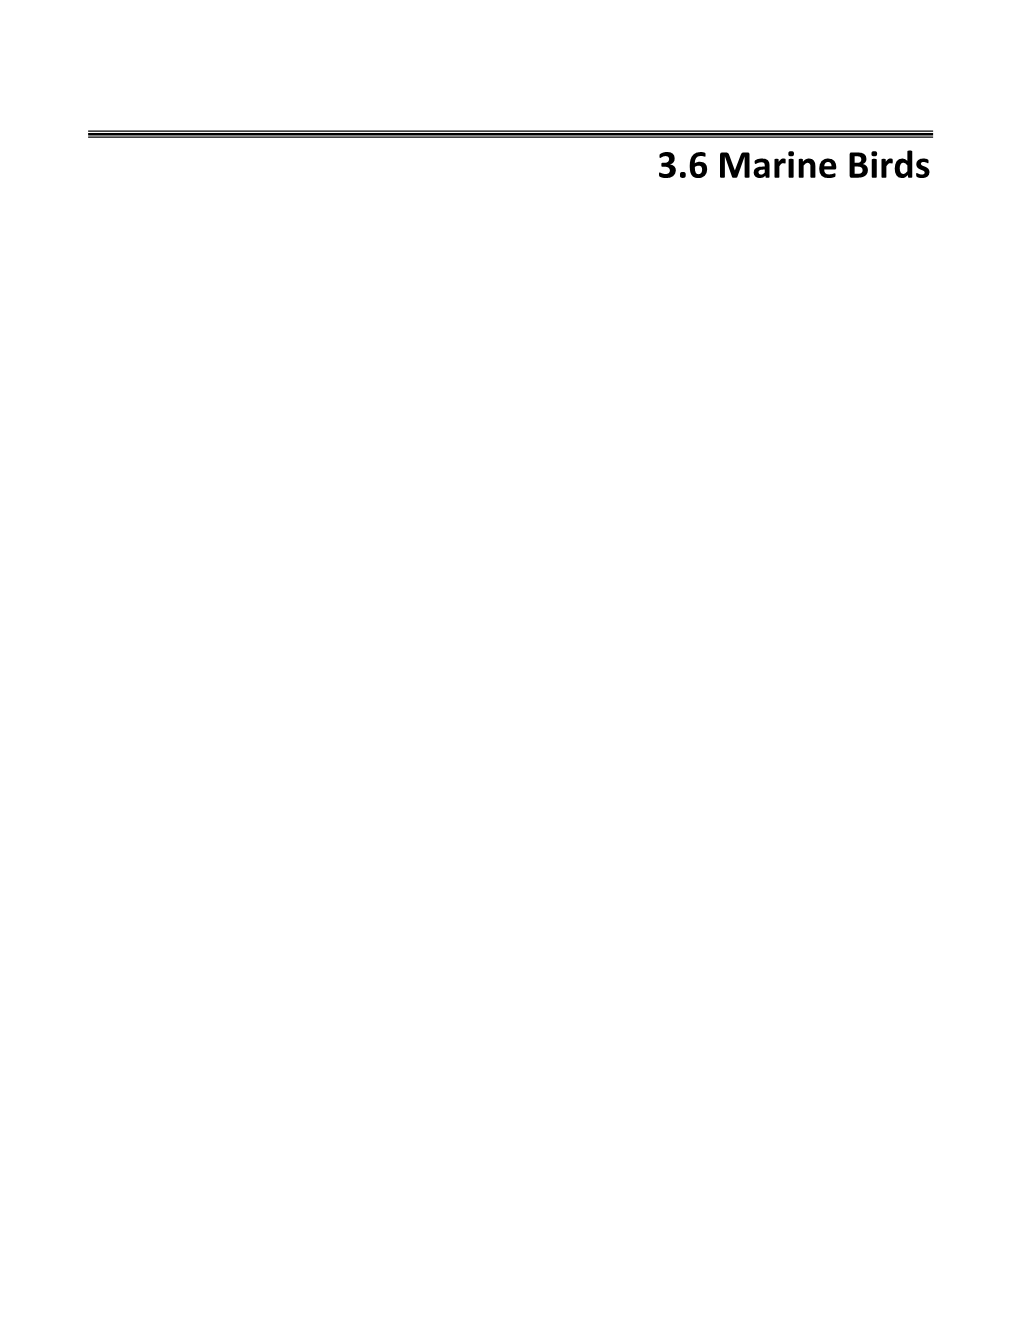 Section 3.6 Marine Birds